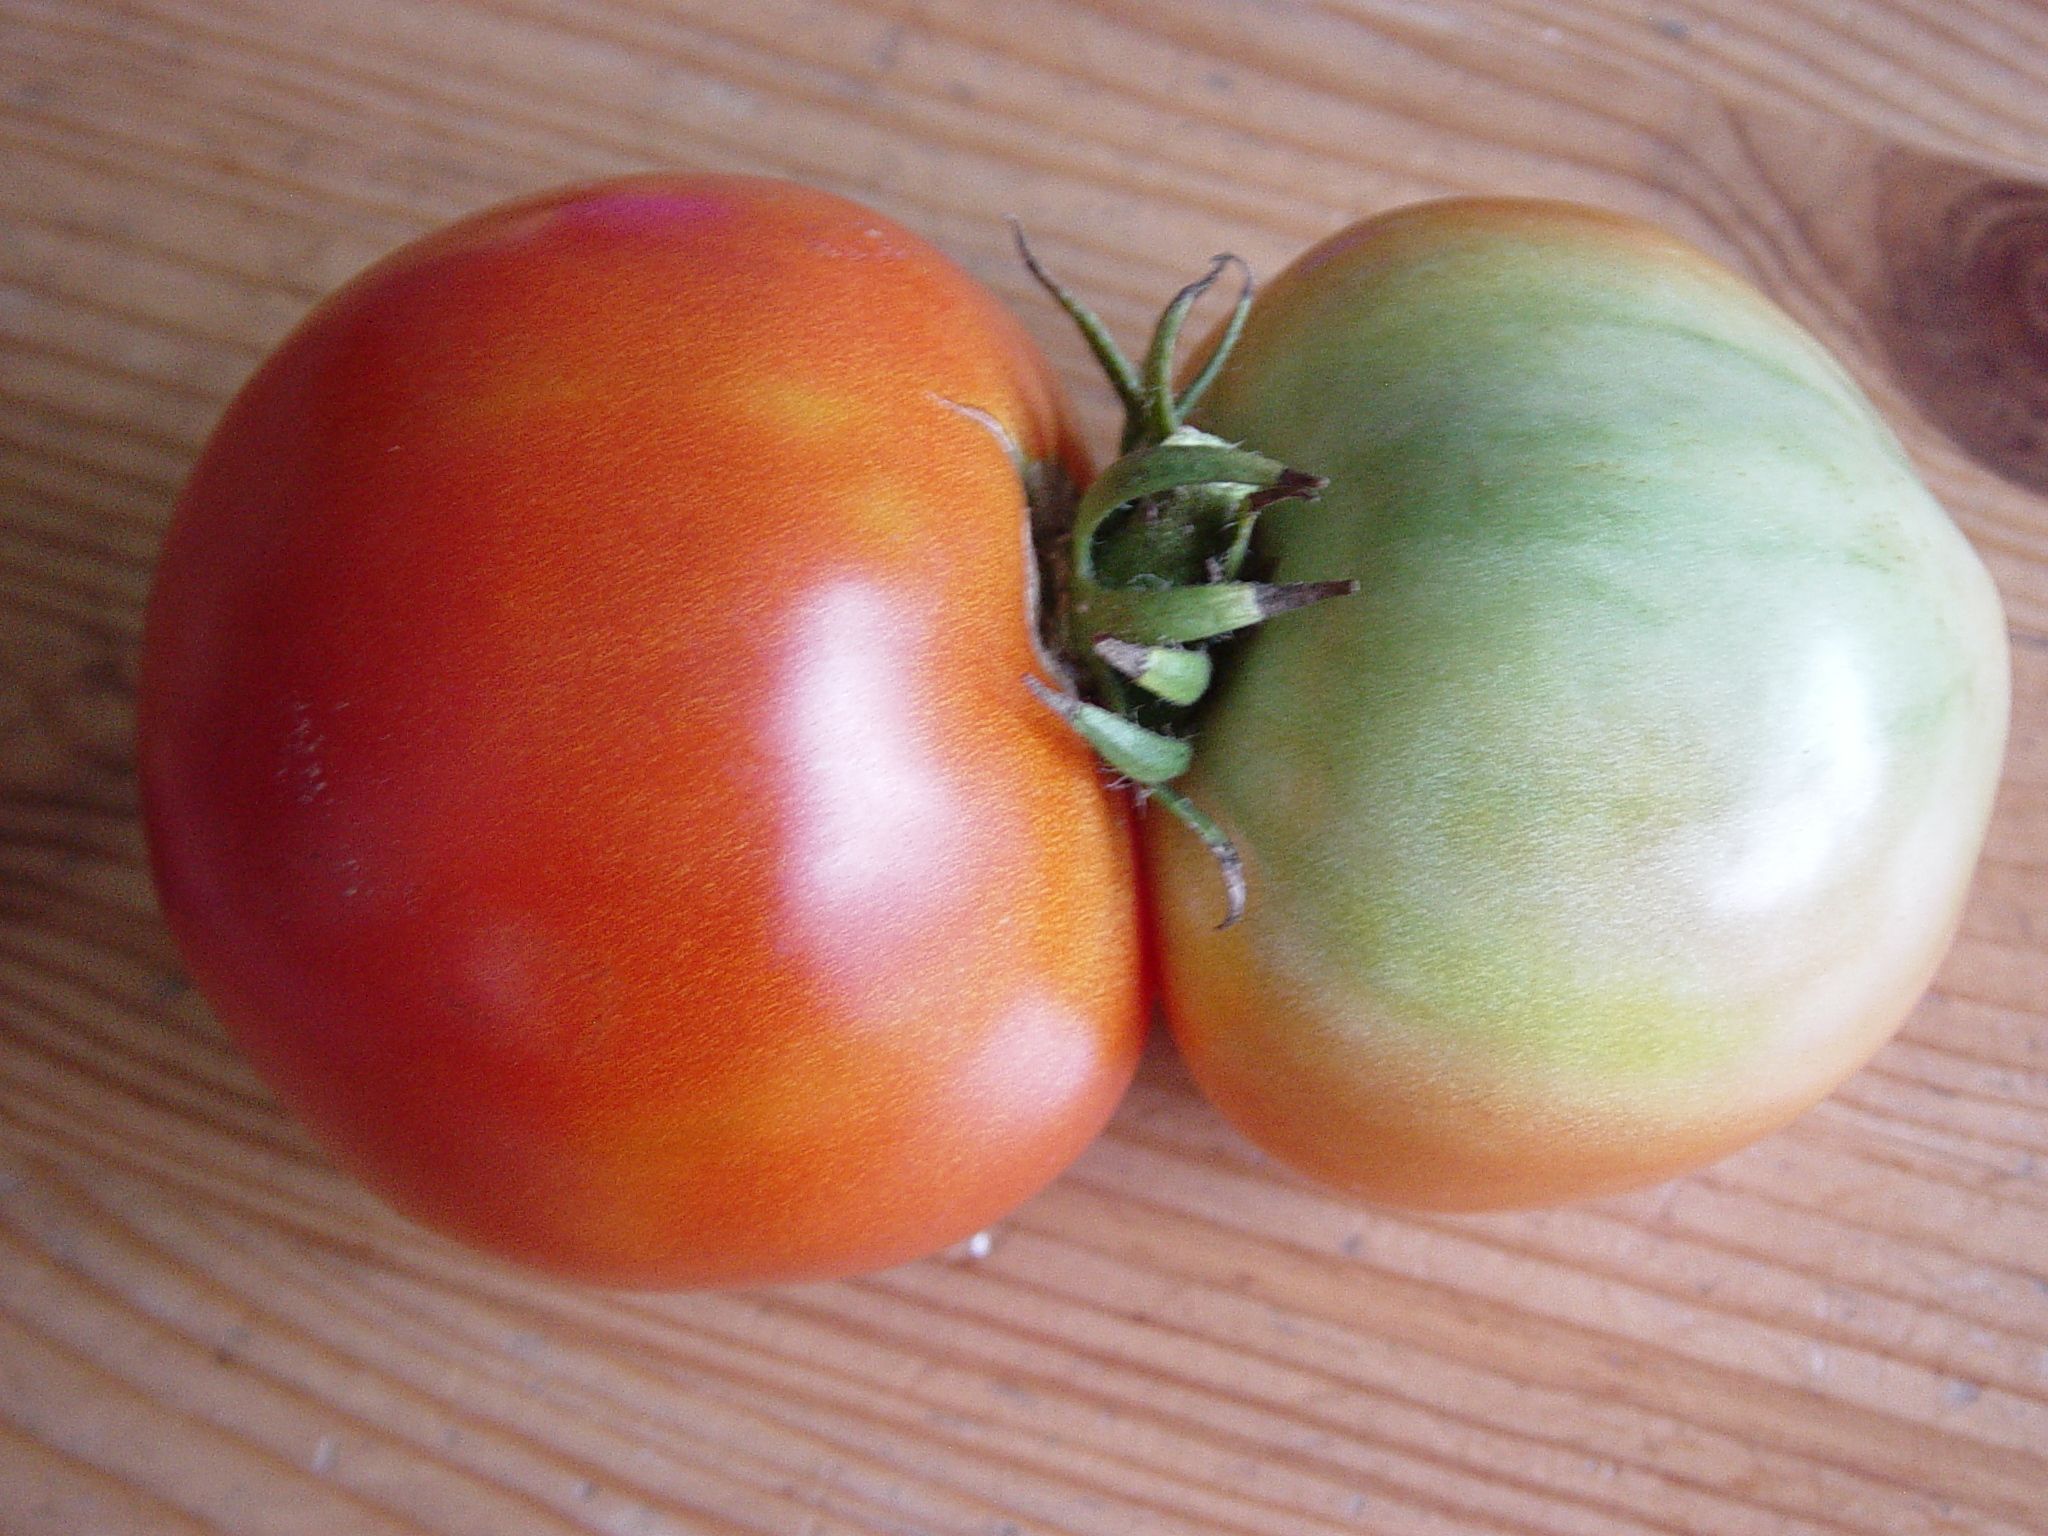 strange twin tomato from the garden | food | Pinterest | Food